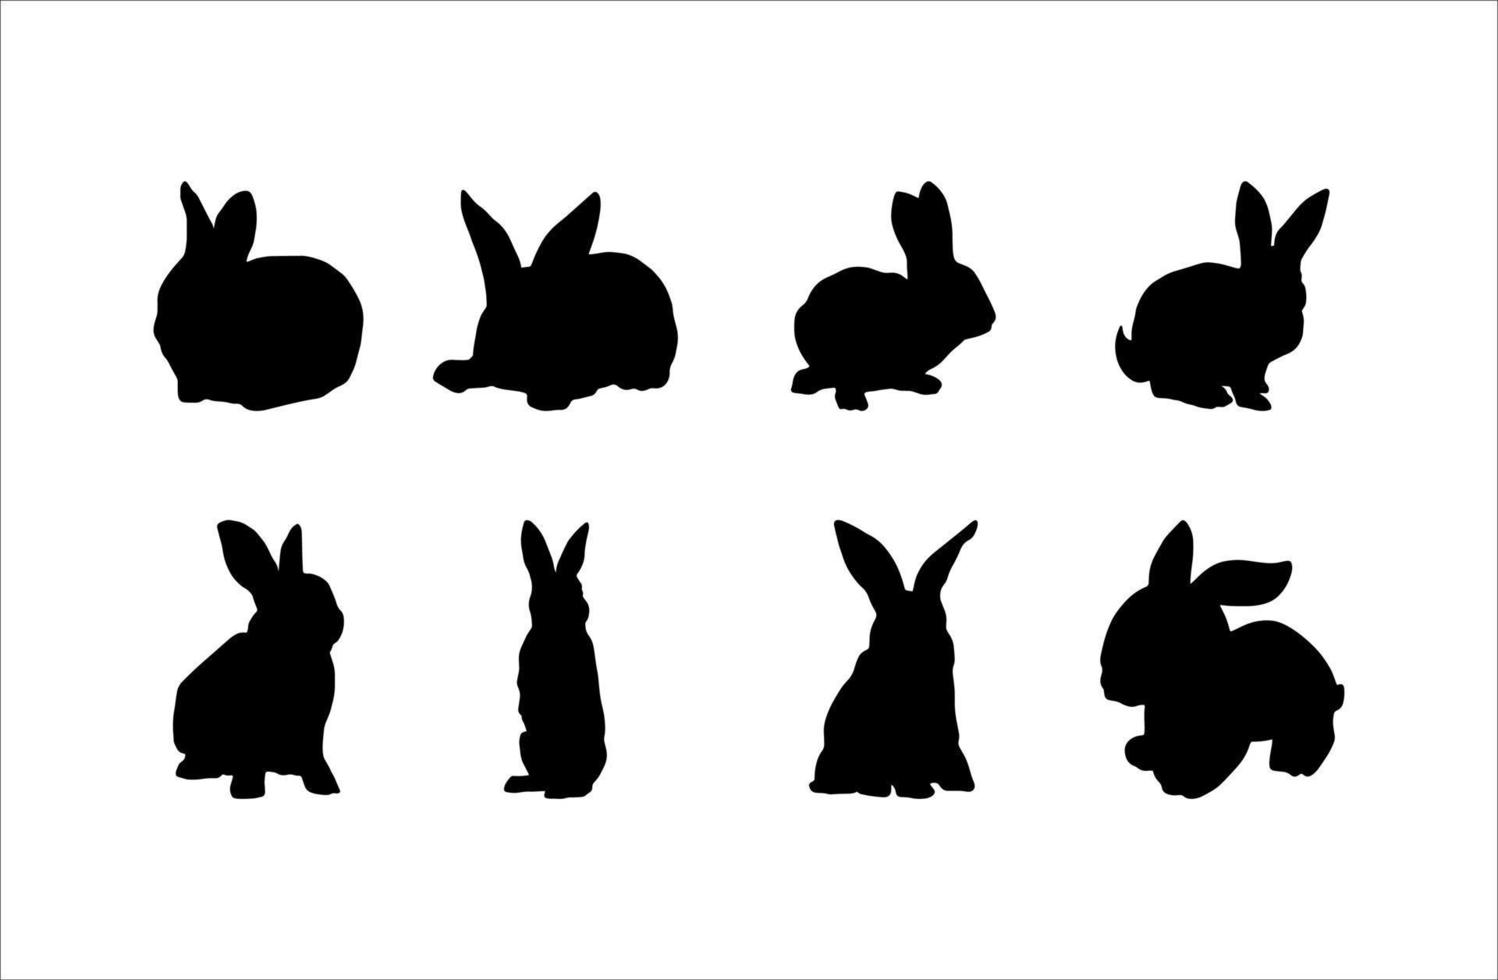 colección de conejo silueta negra vector